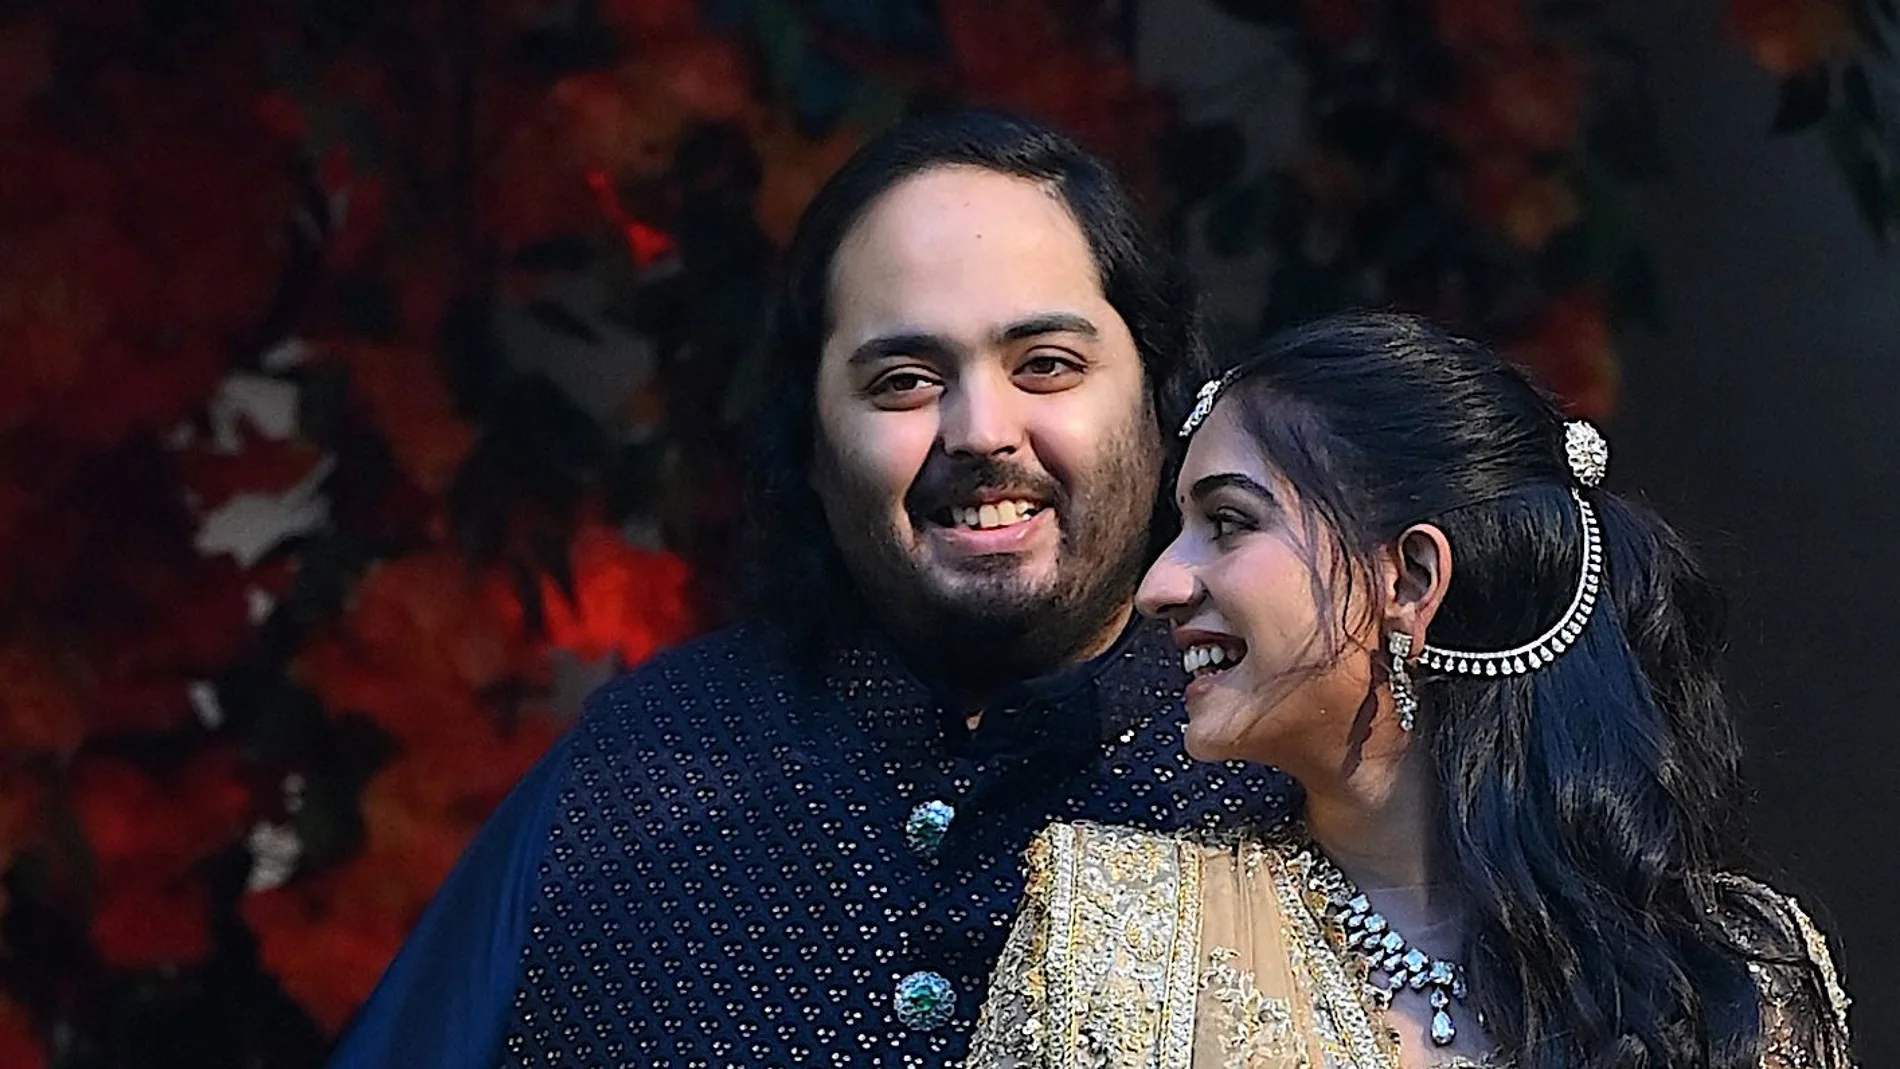 Anant Ambani (L), the son of Indian billionaire Mukesh Ambani, poses with his fiancée Radhika Merchant during their engagement ceremony in Mumbai